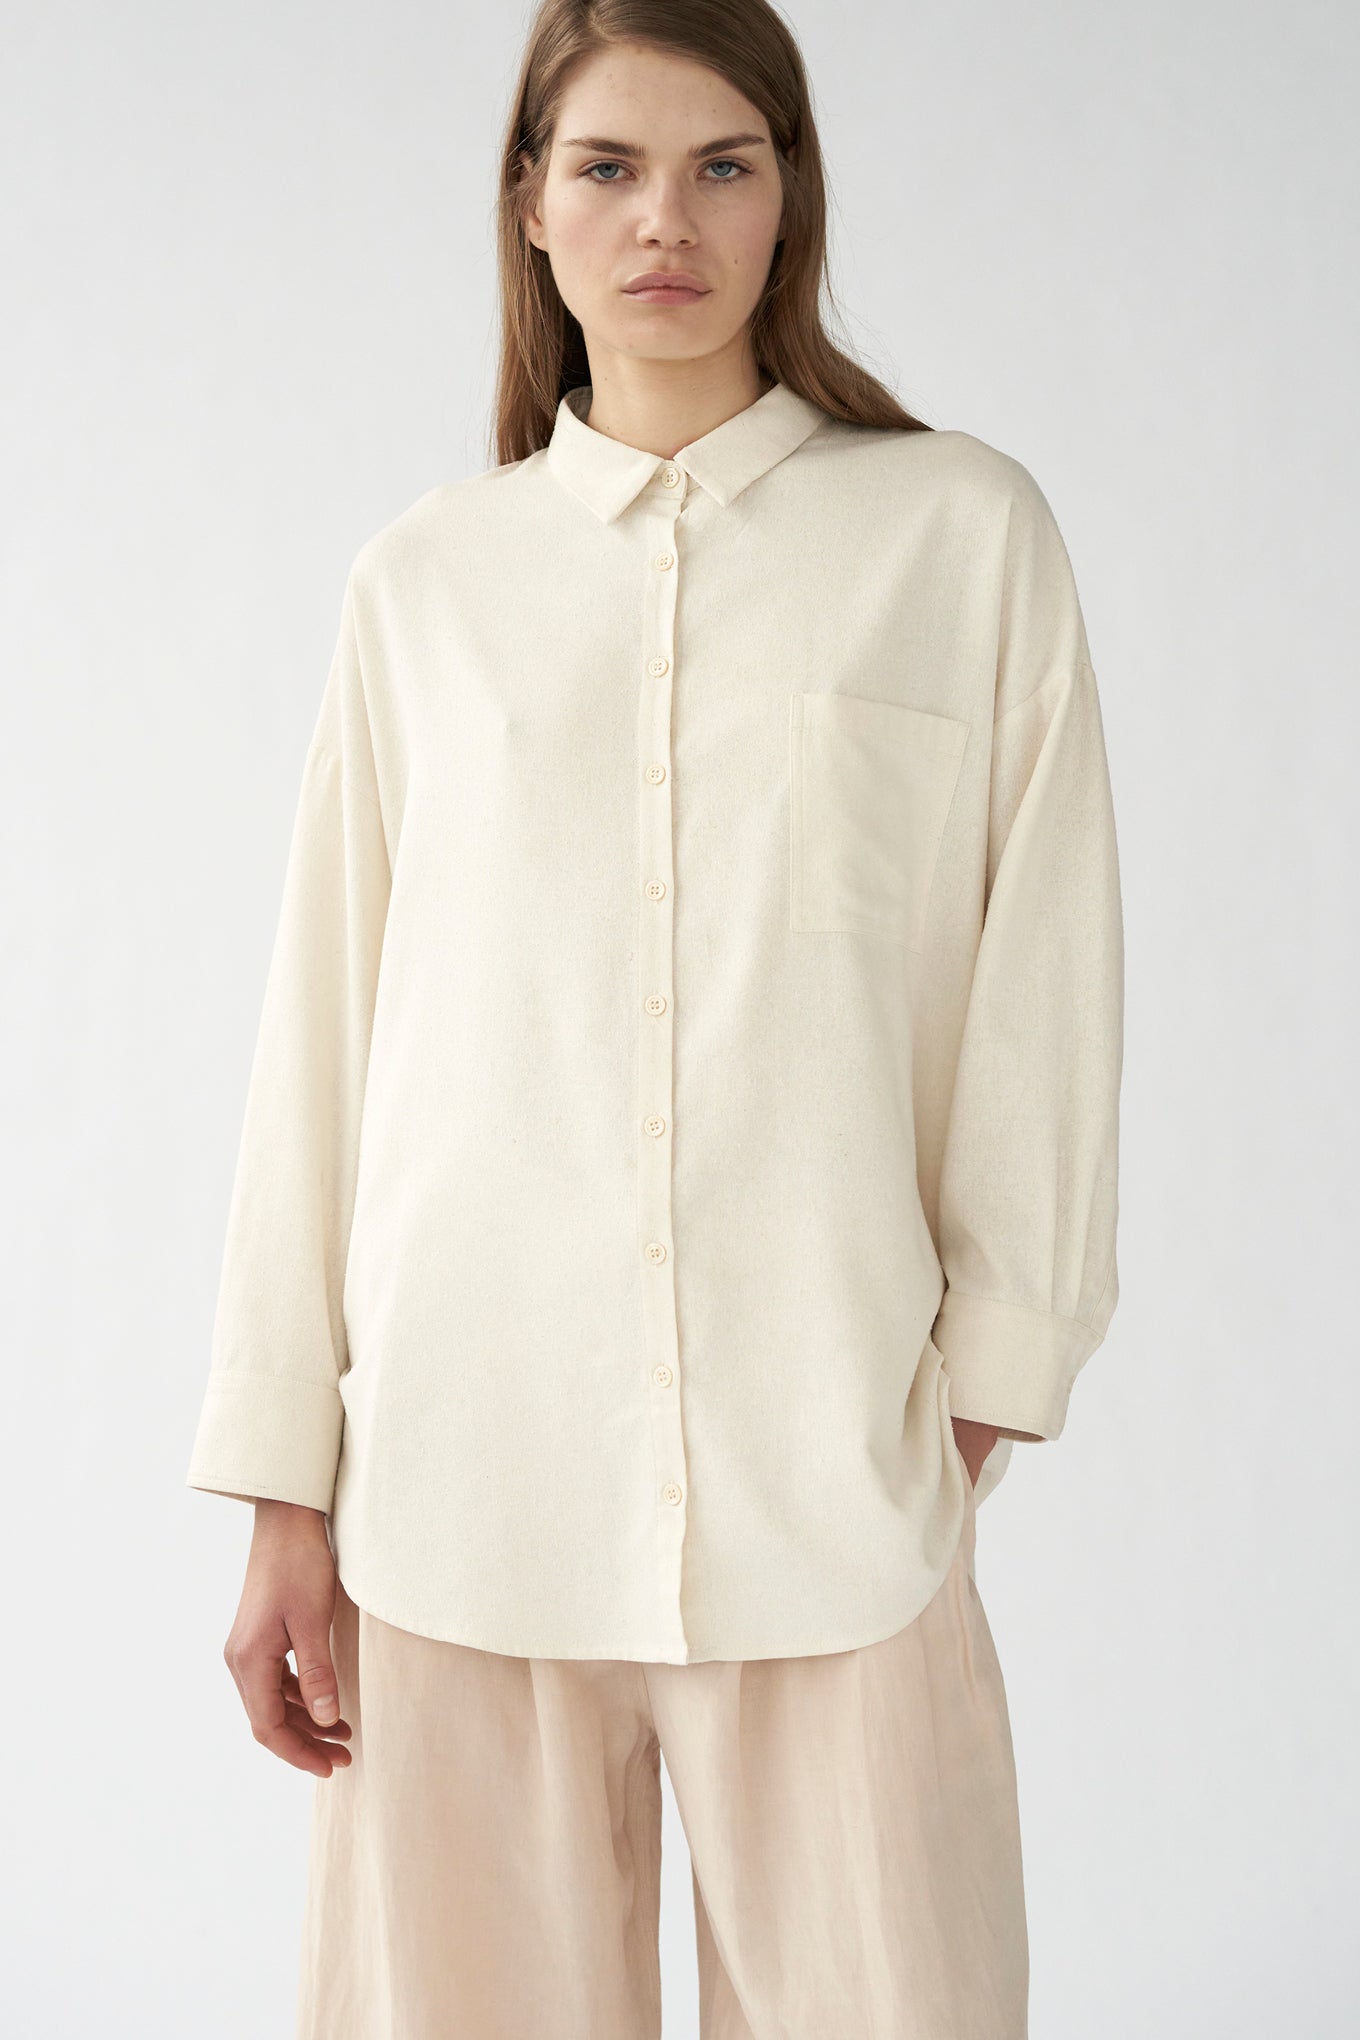 KOKOON - Bianca Pocket Shirt Off White Shine